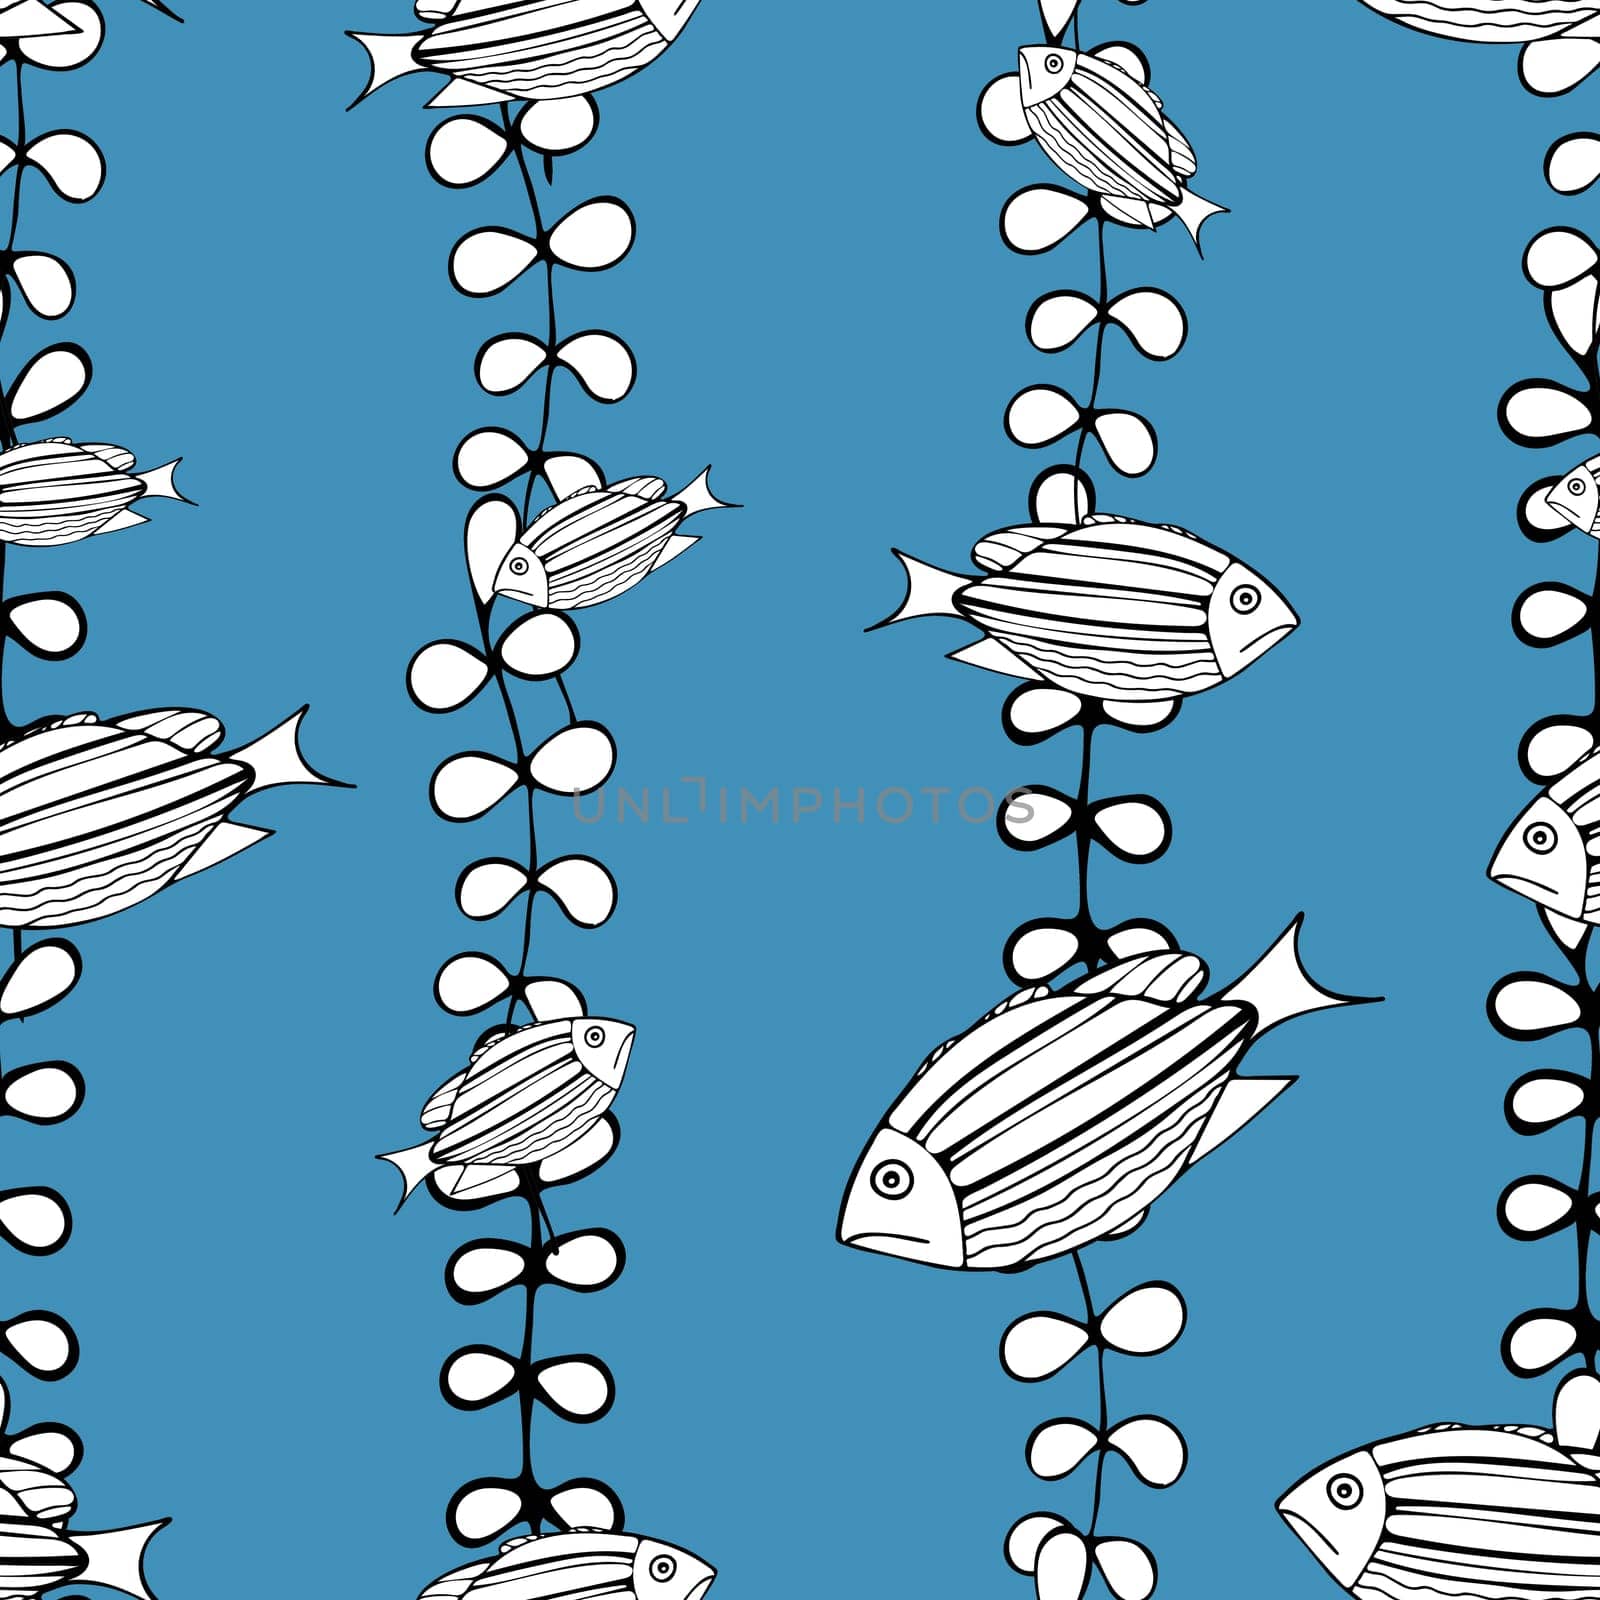 Hand Drawn Black and White Fish on Blue Background. by Rina_Dozornaya